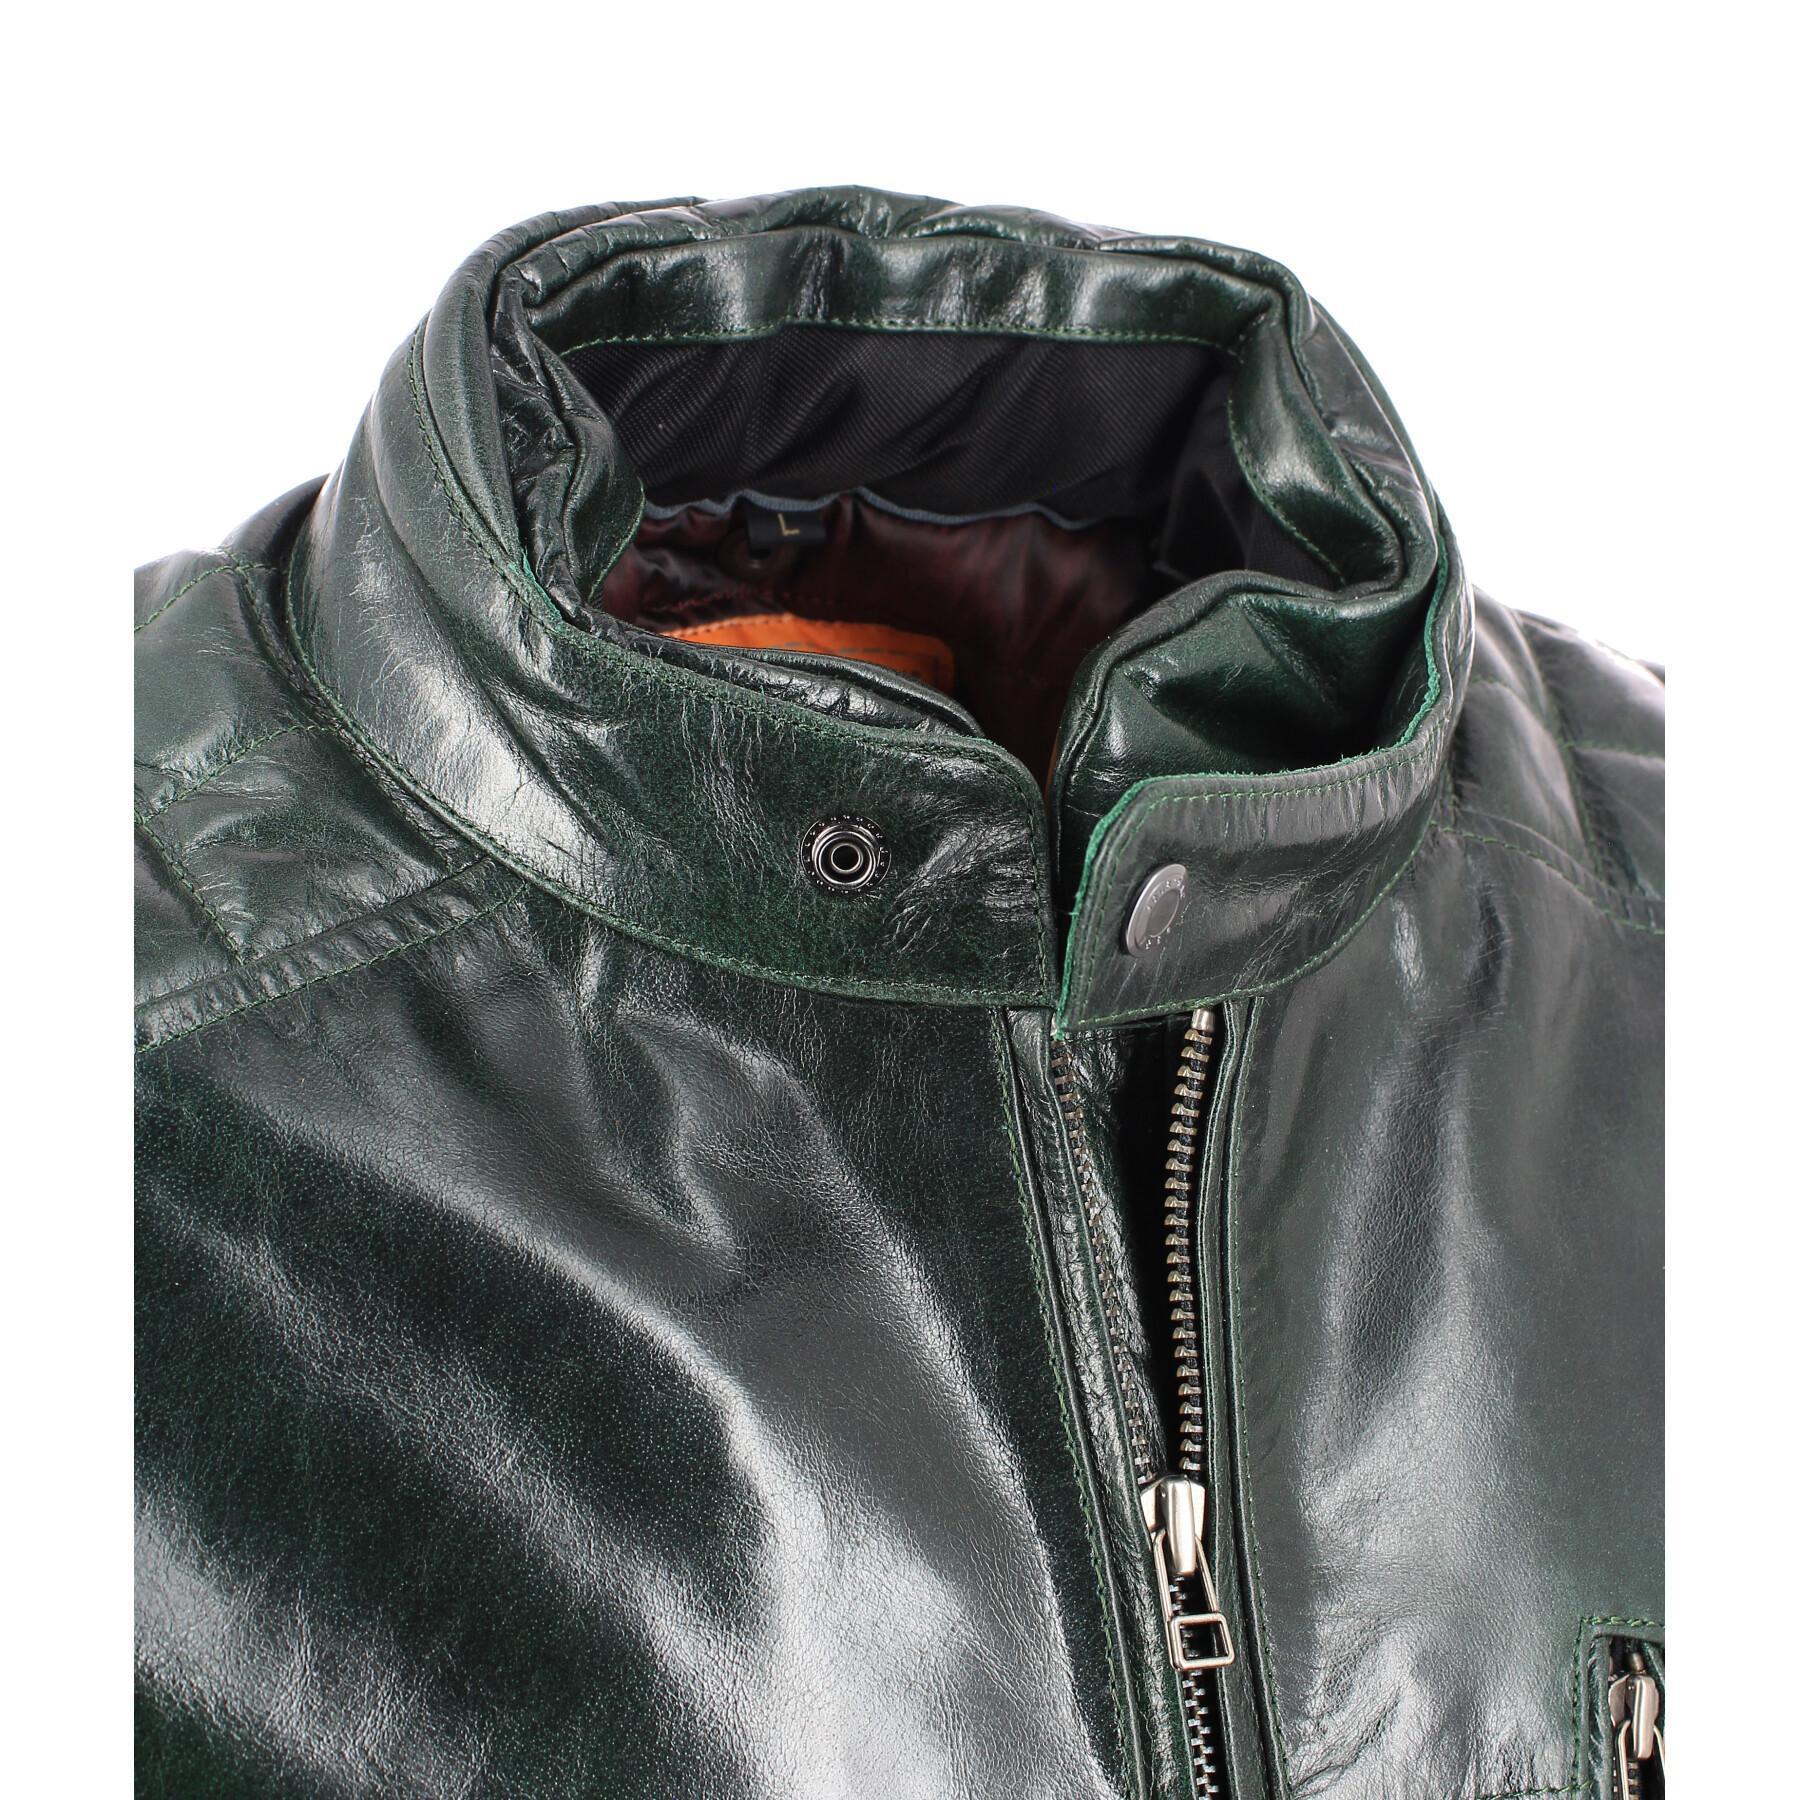 Motorcycle leather jacket Soubirac FRISCO Anglais